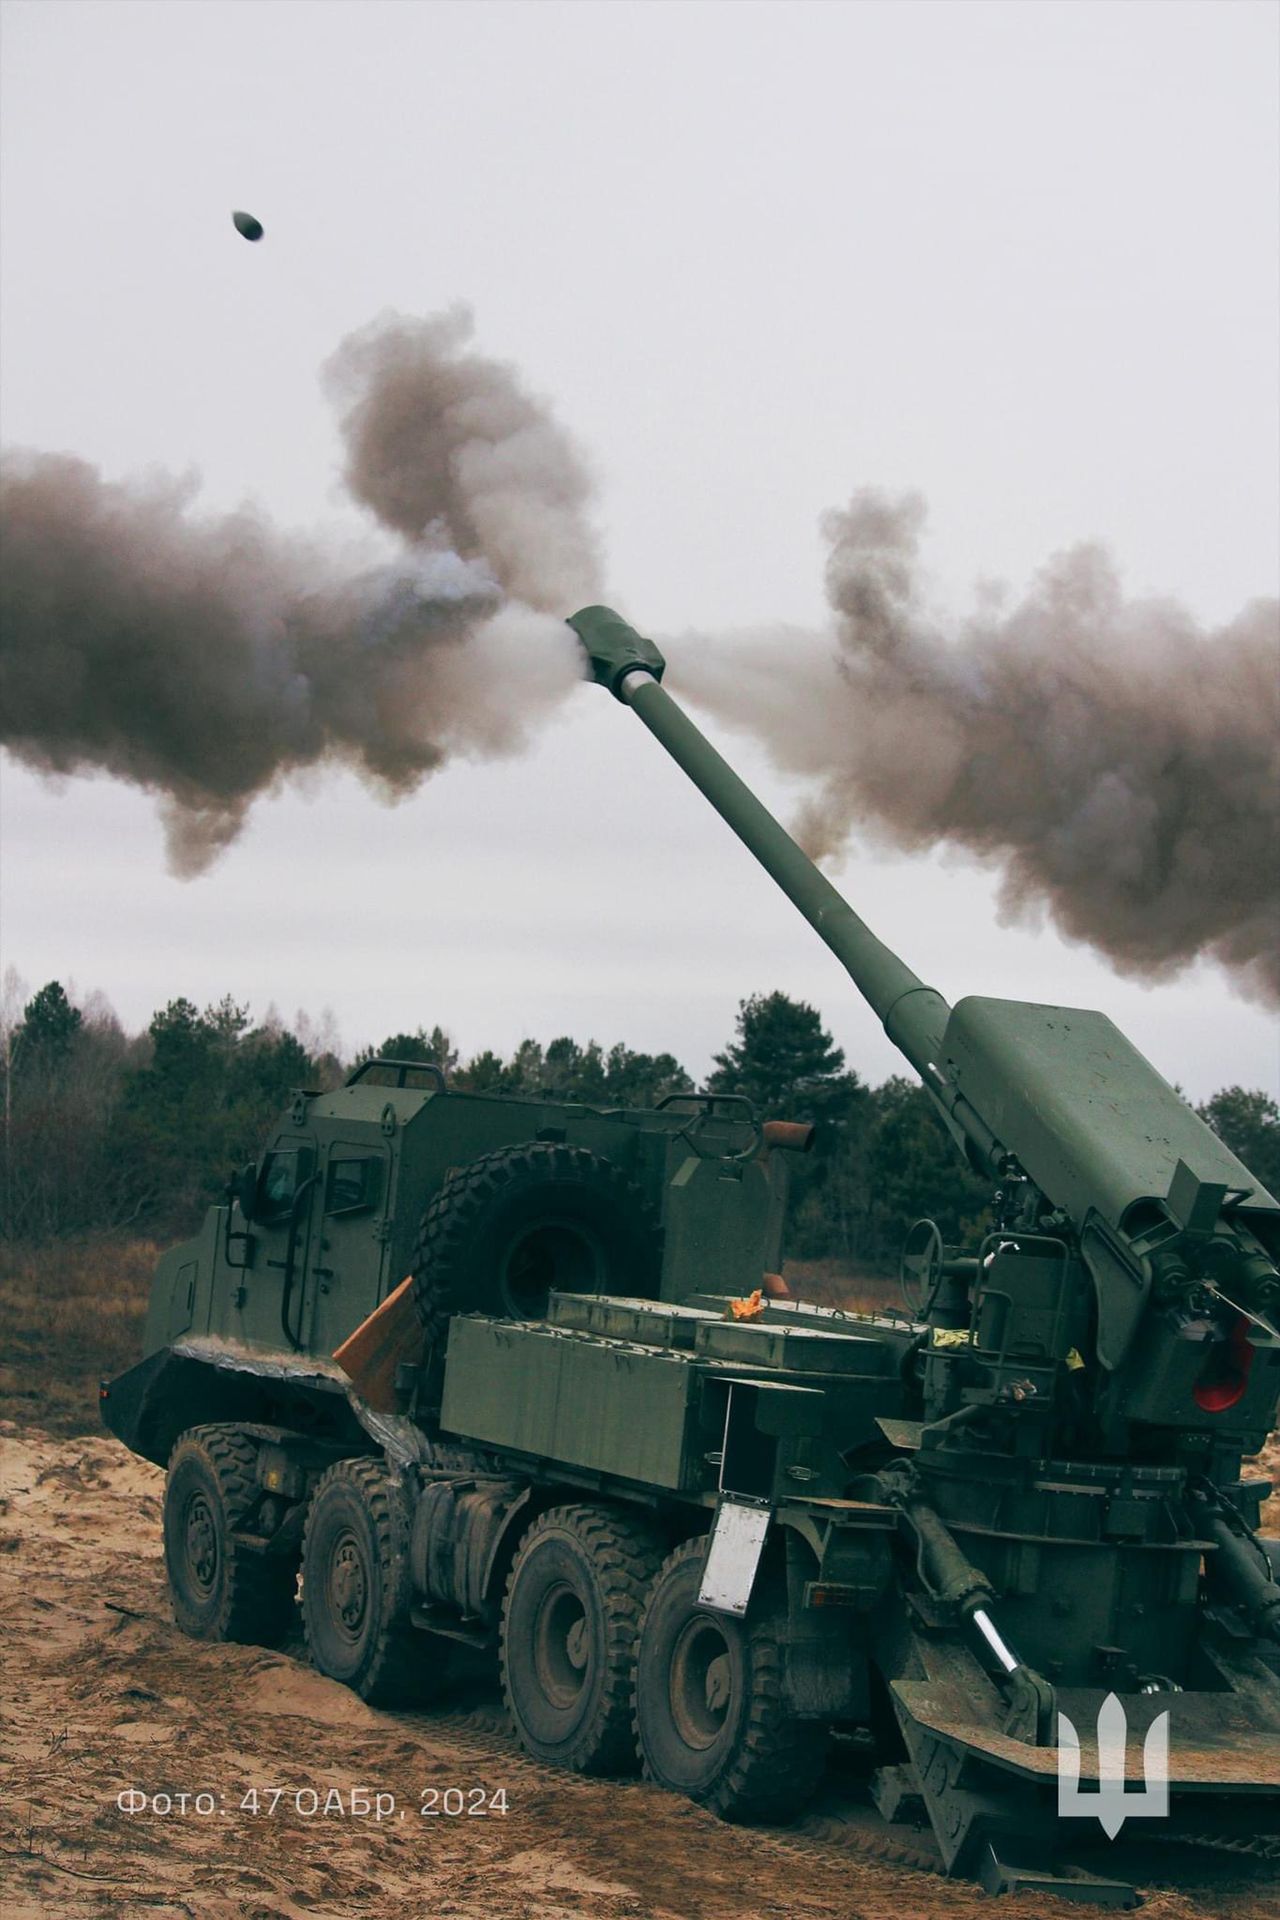 Ukrainian 2S22 Bogdana howitzer: Modern upgrades and superior capabilities rival Russian artillery